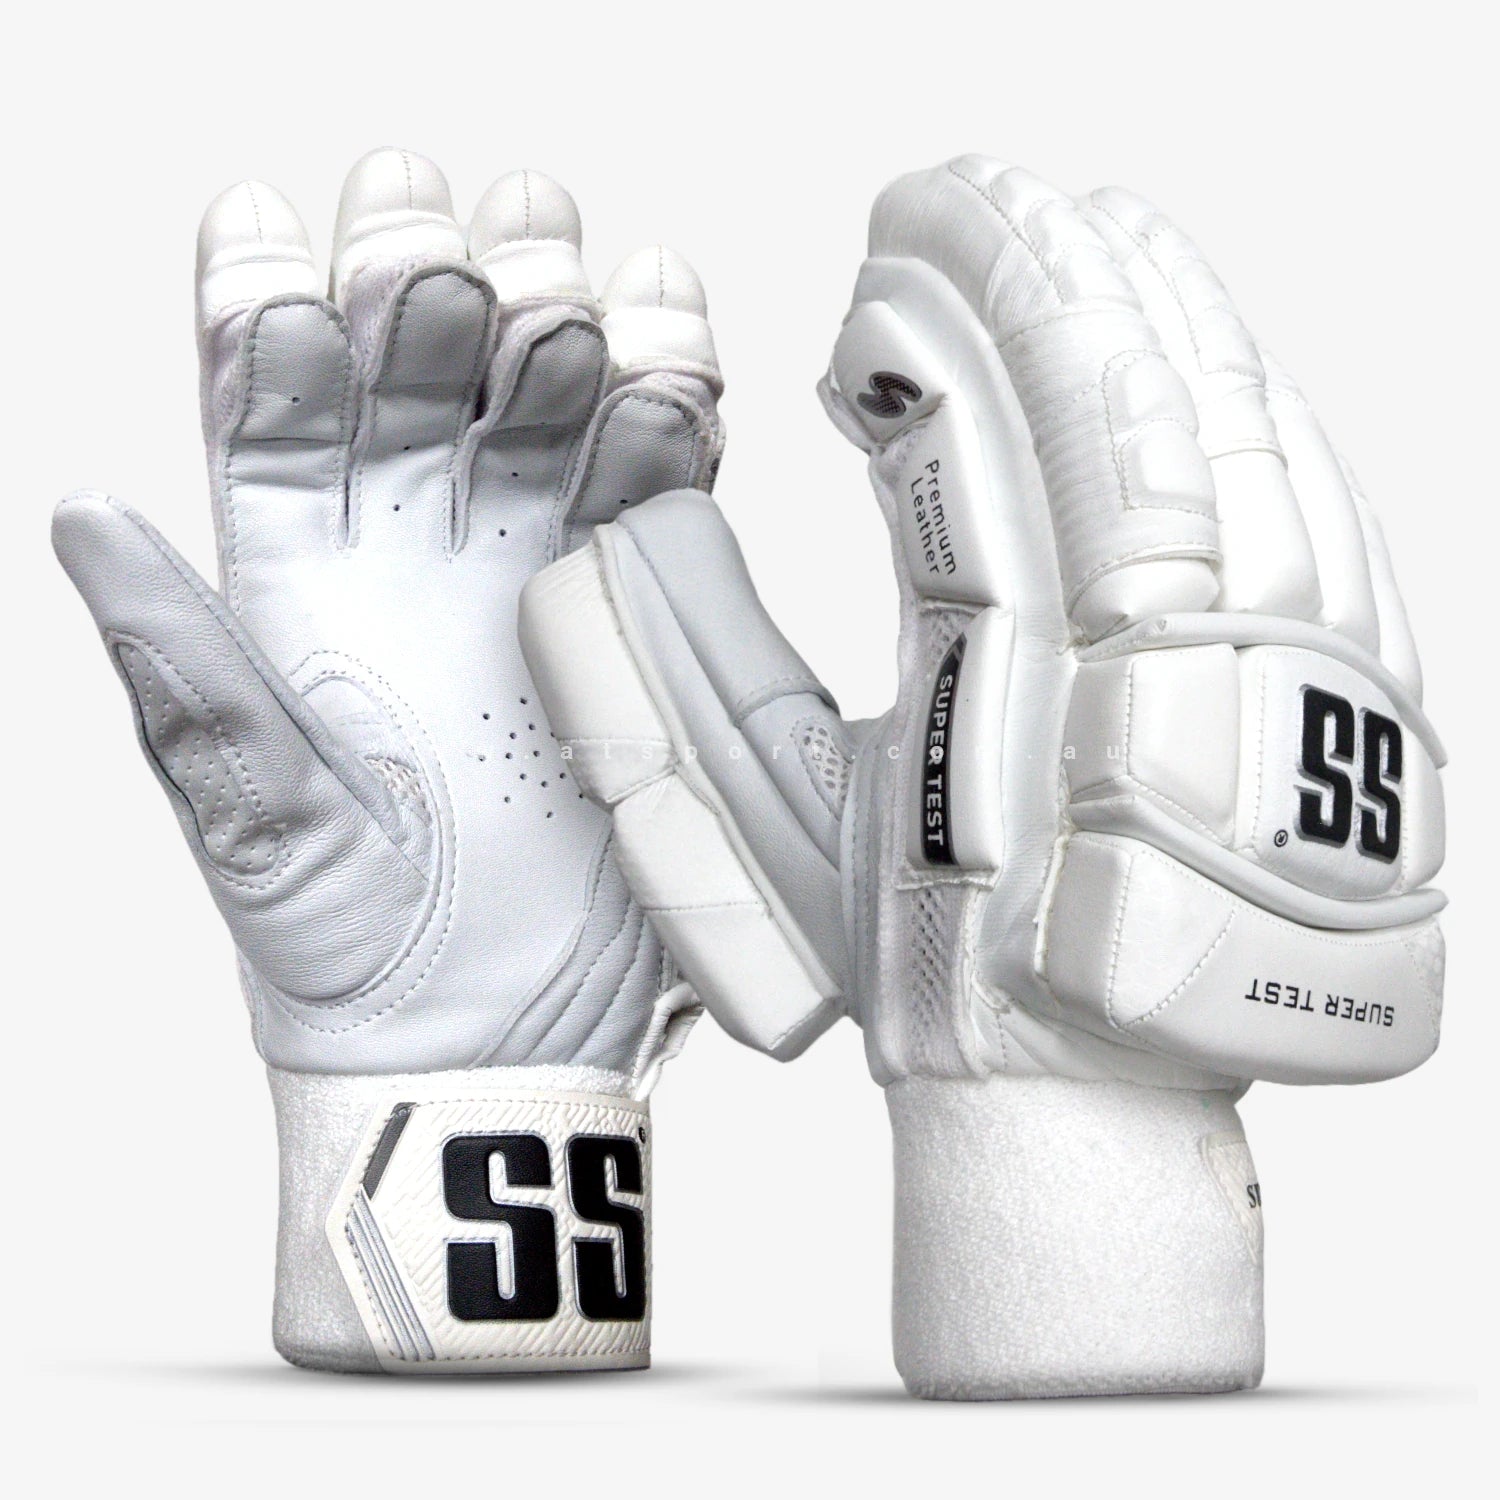 SS Super Test WHITE Cricket Batting Gloves - ADULT